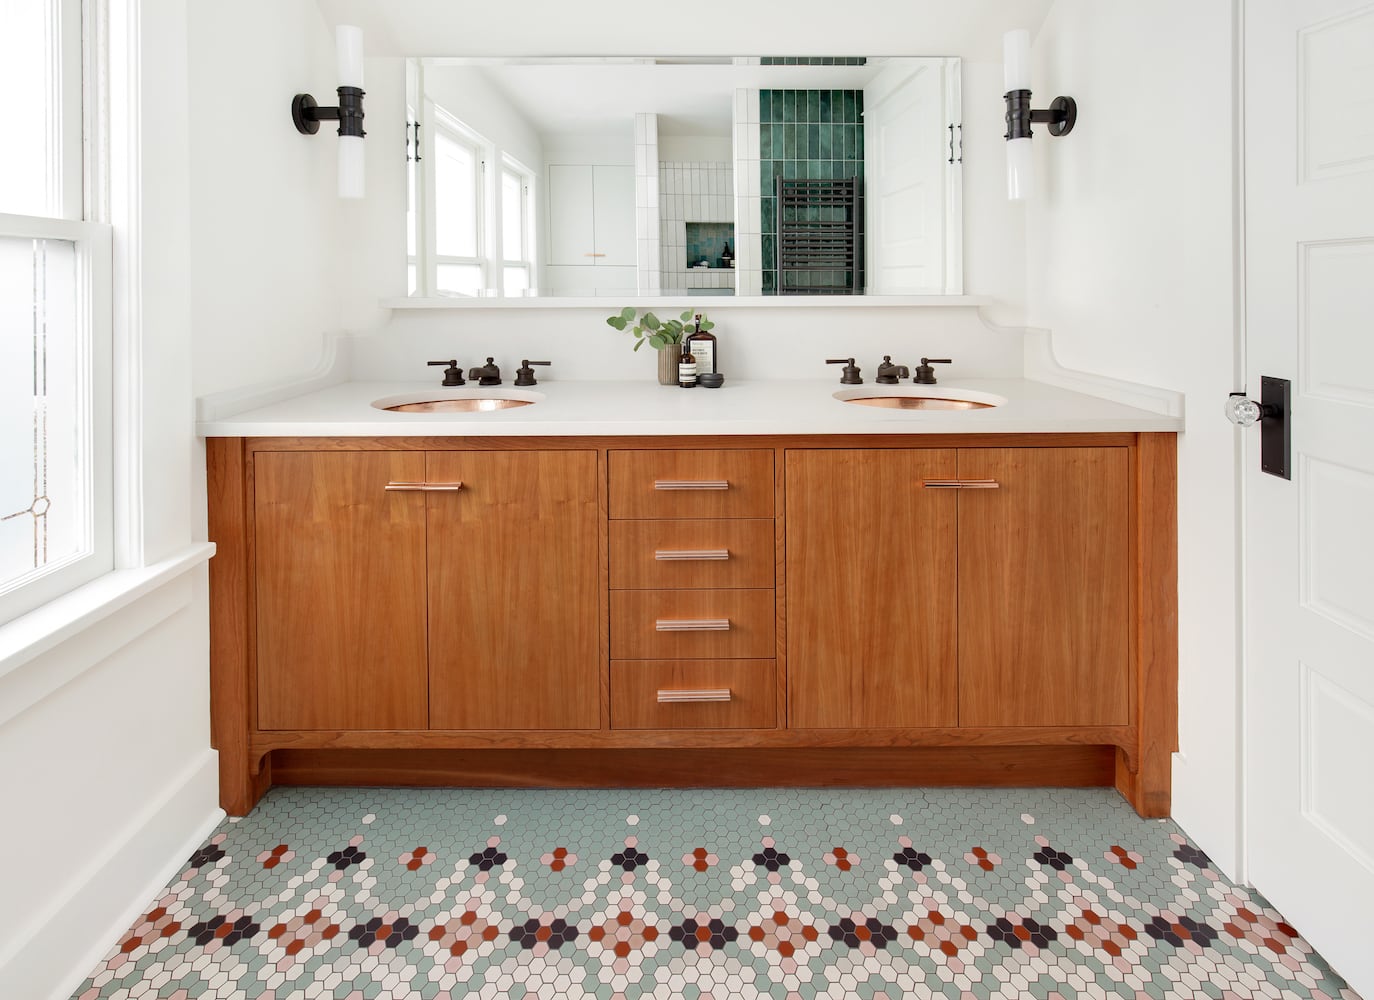 Primary bathroom vanity with cherry cabinets, pattern hexagon mosaic tile floor